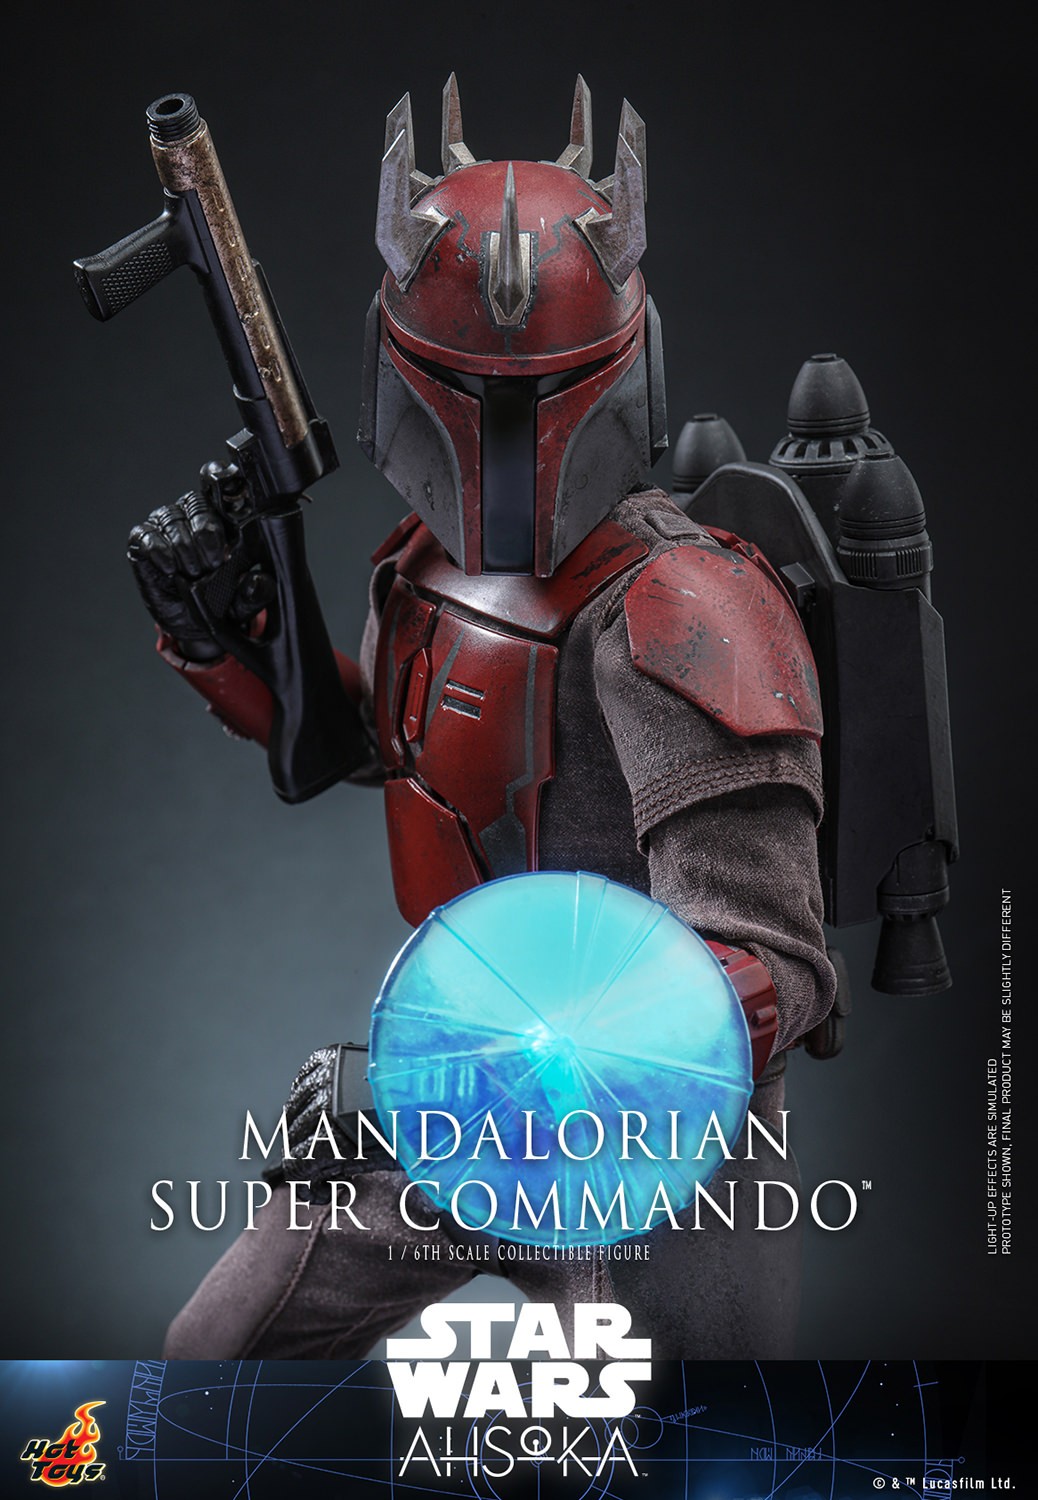 Mandalorian Super Commando Sixth Scale Figure by Hot Toys 